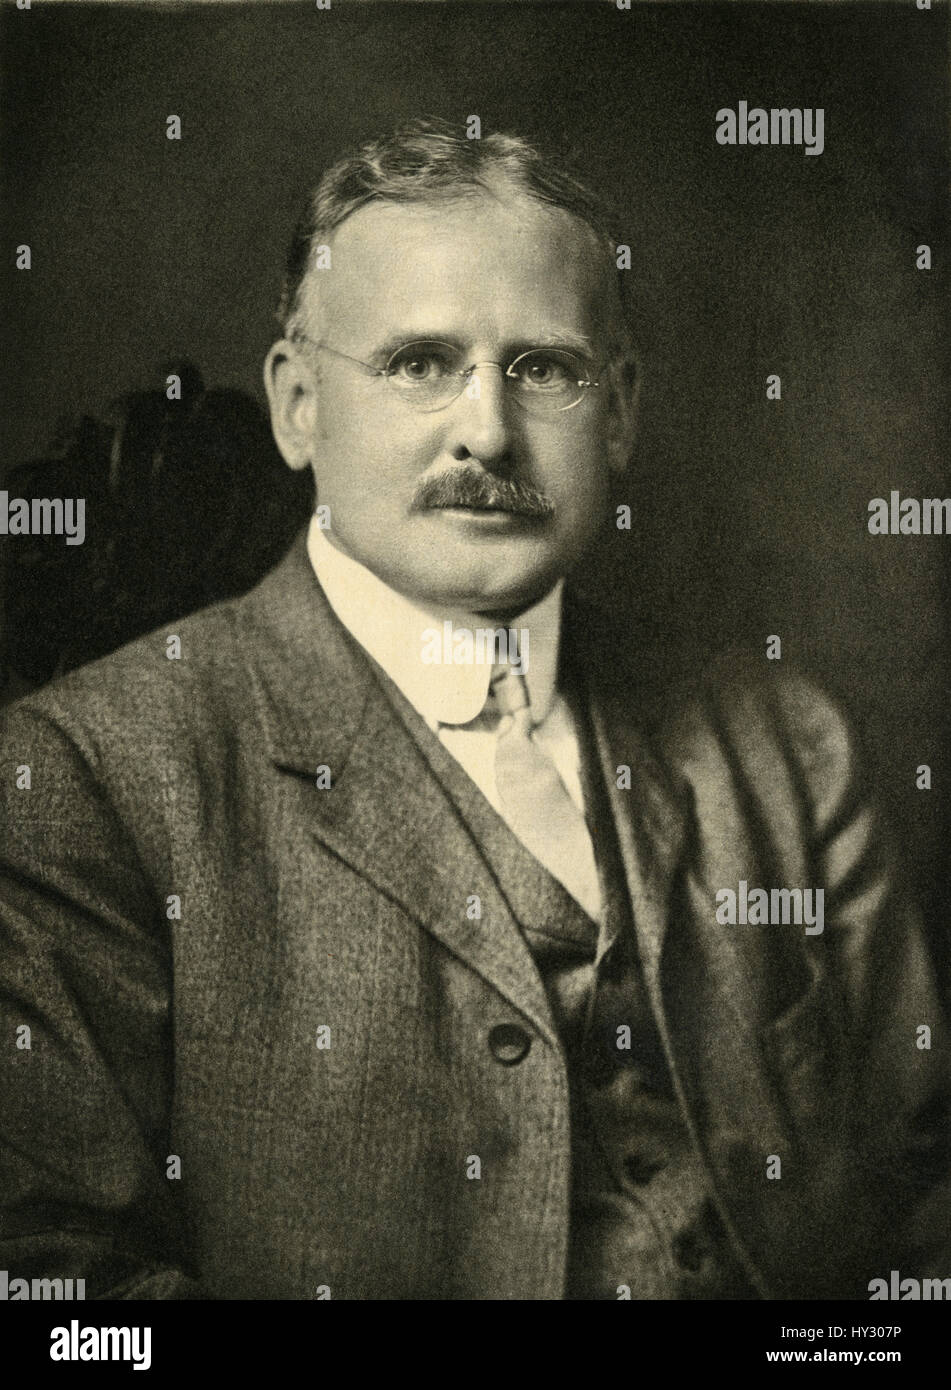 Antique 1911 photograph, Frederick A. Goetze. Frederick Arthur Goetze was a Dean of SEAS and Treasurer of Columbia University. SOURCE: ORIGINAL ROTOGRAVURE PRINT. Stock Photo